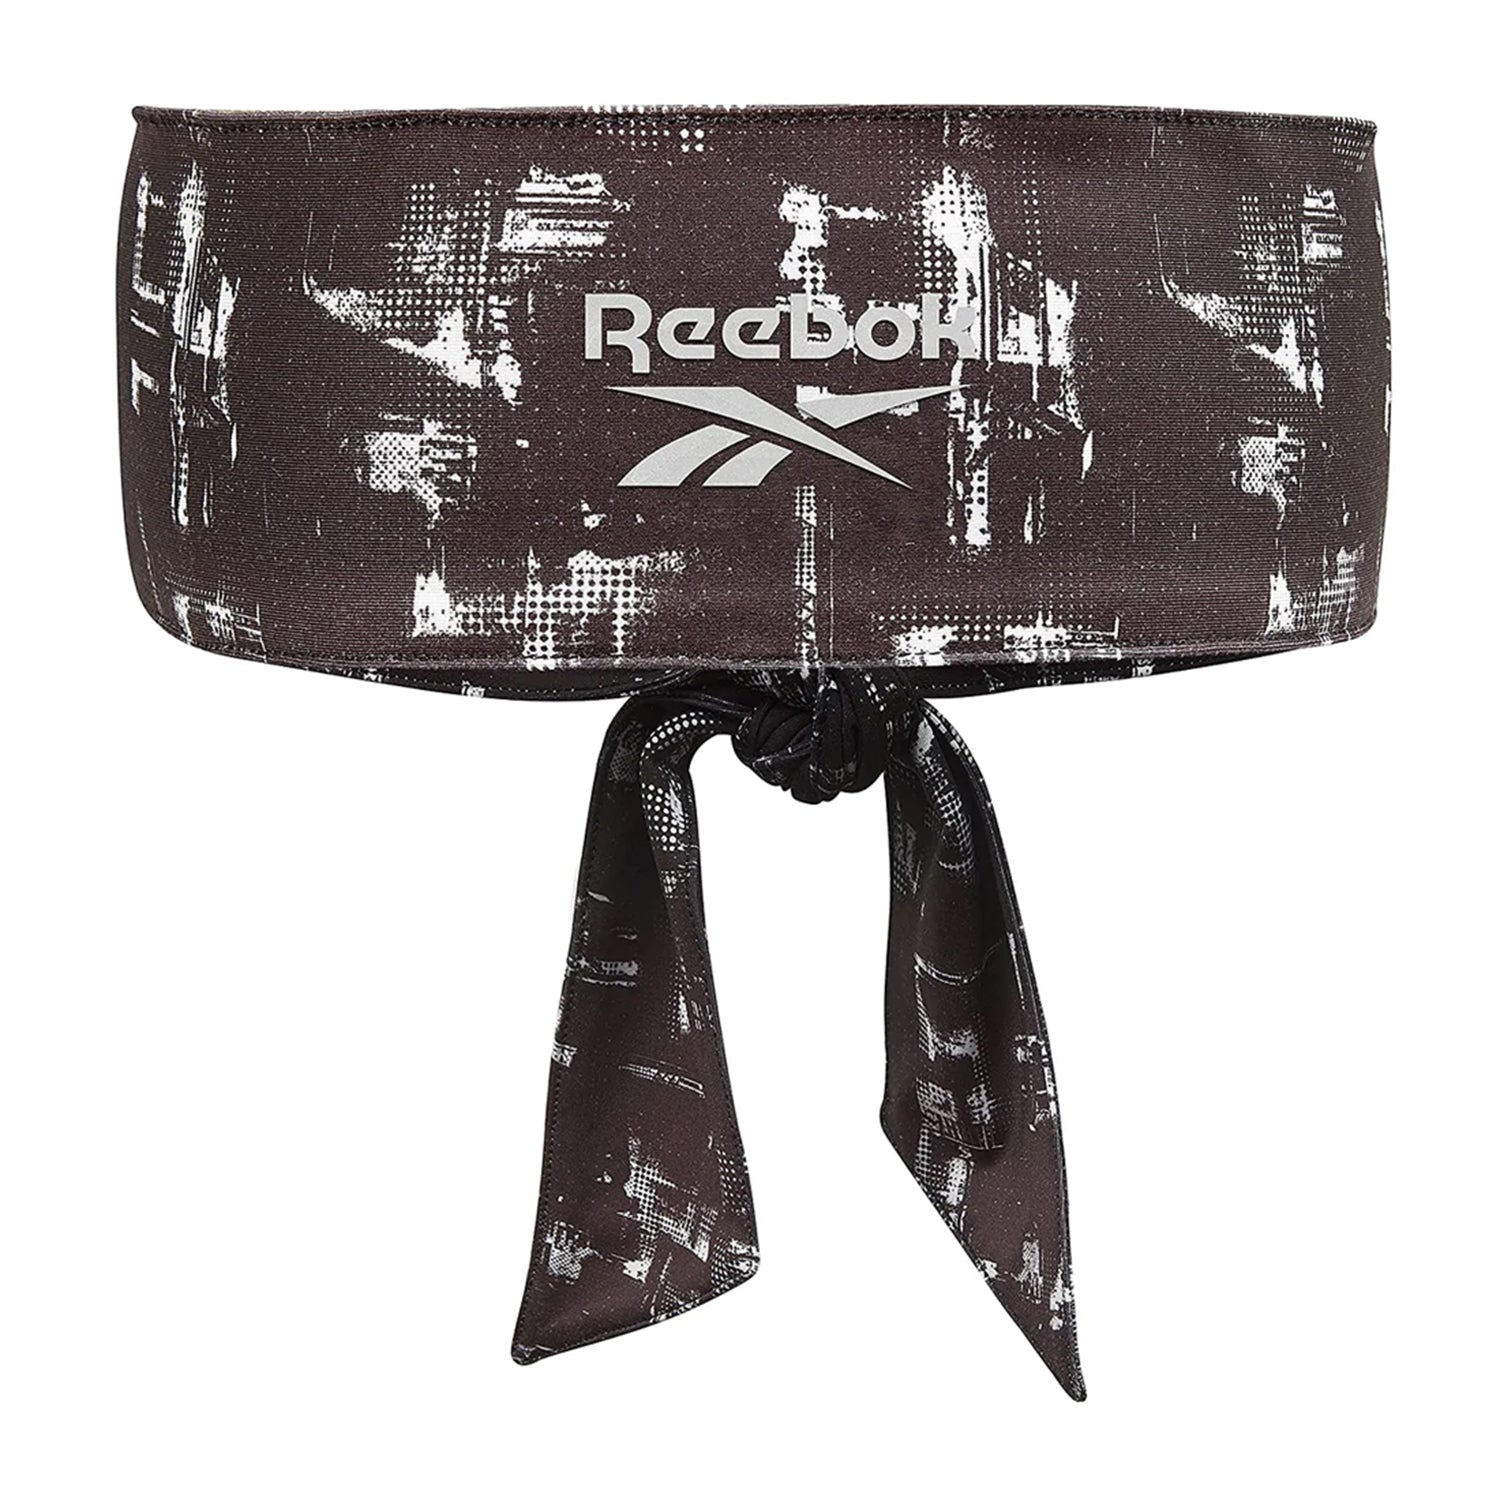 Reebok Headband, Black/Grey - Best Price online Prokicksports.com